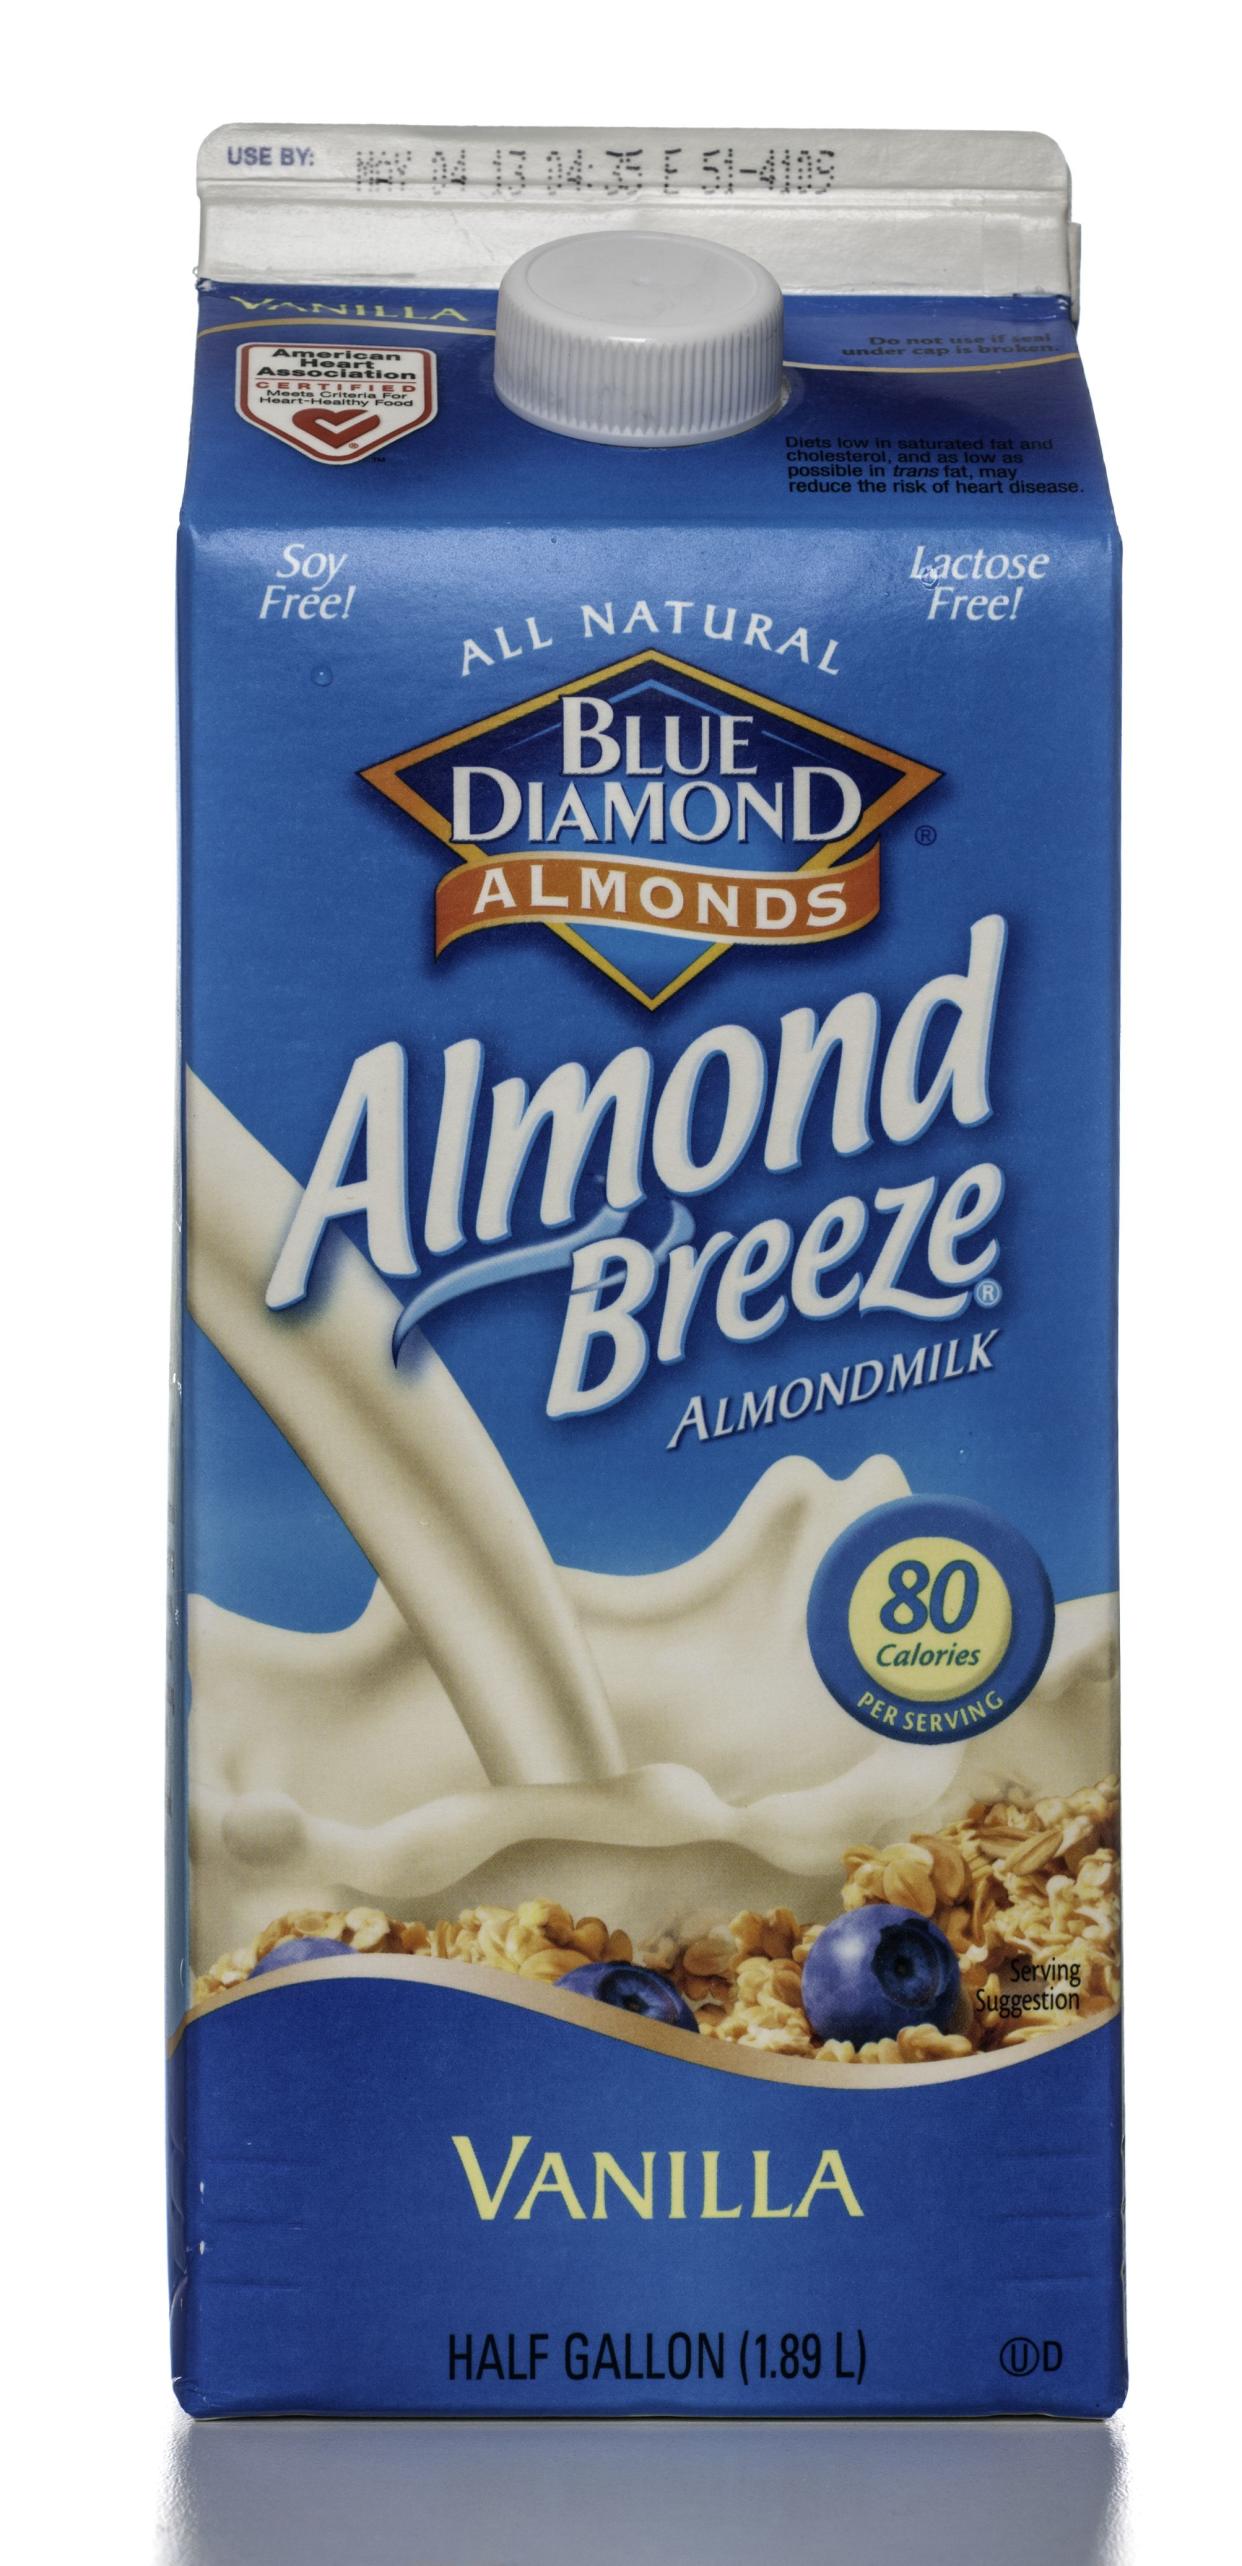 Miami, USA - April 04, 2013: Blue Diamond Almonds Breeze Vanilla Milk half gallon carton. Blue Diamond Almonds brand is owned by Blue Diamond Growers.